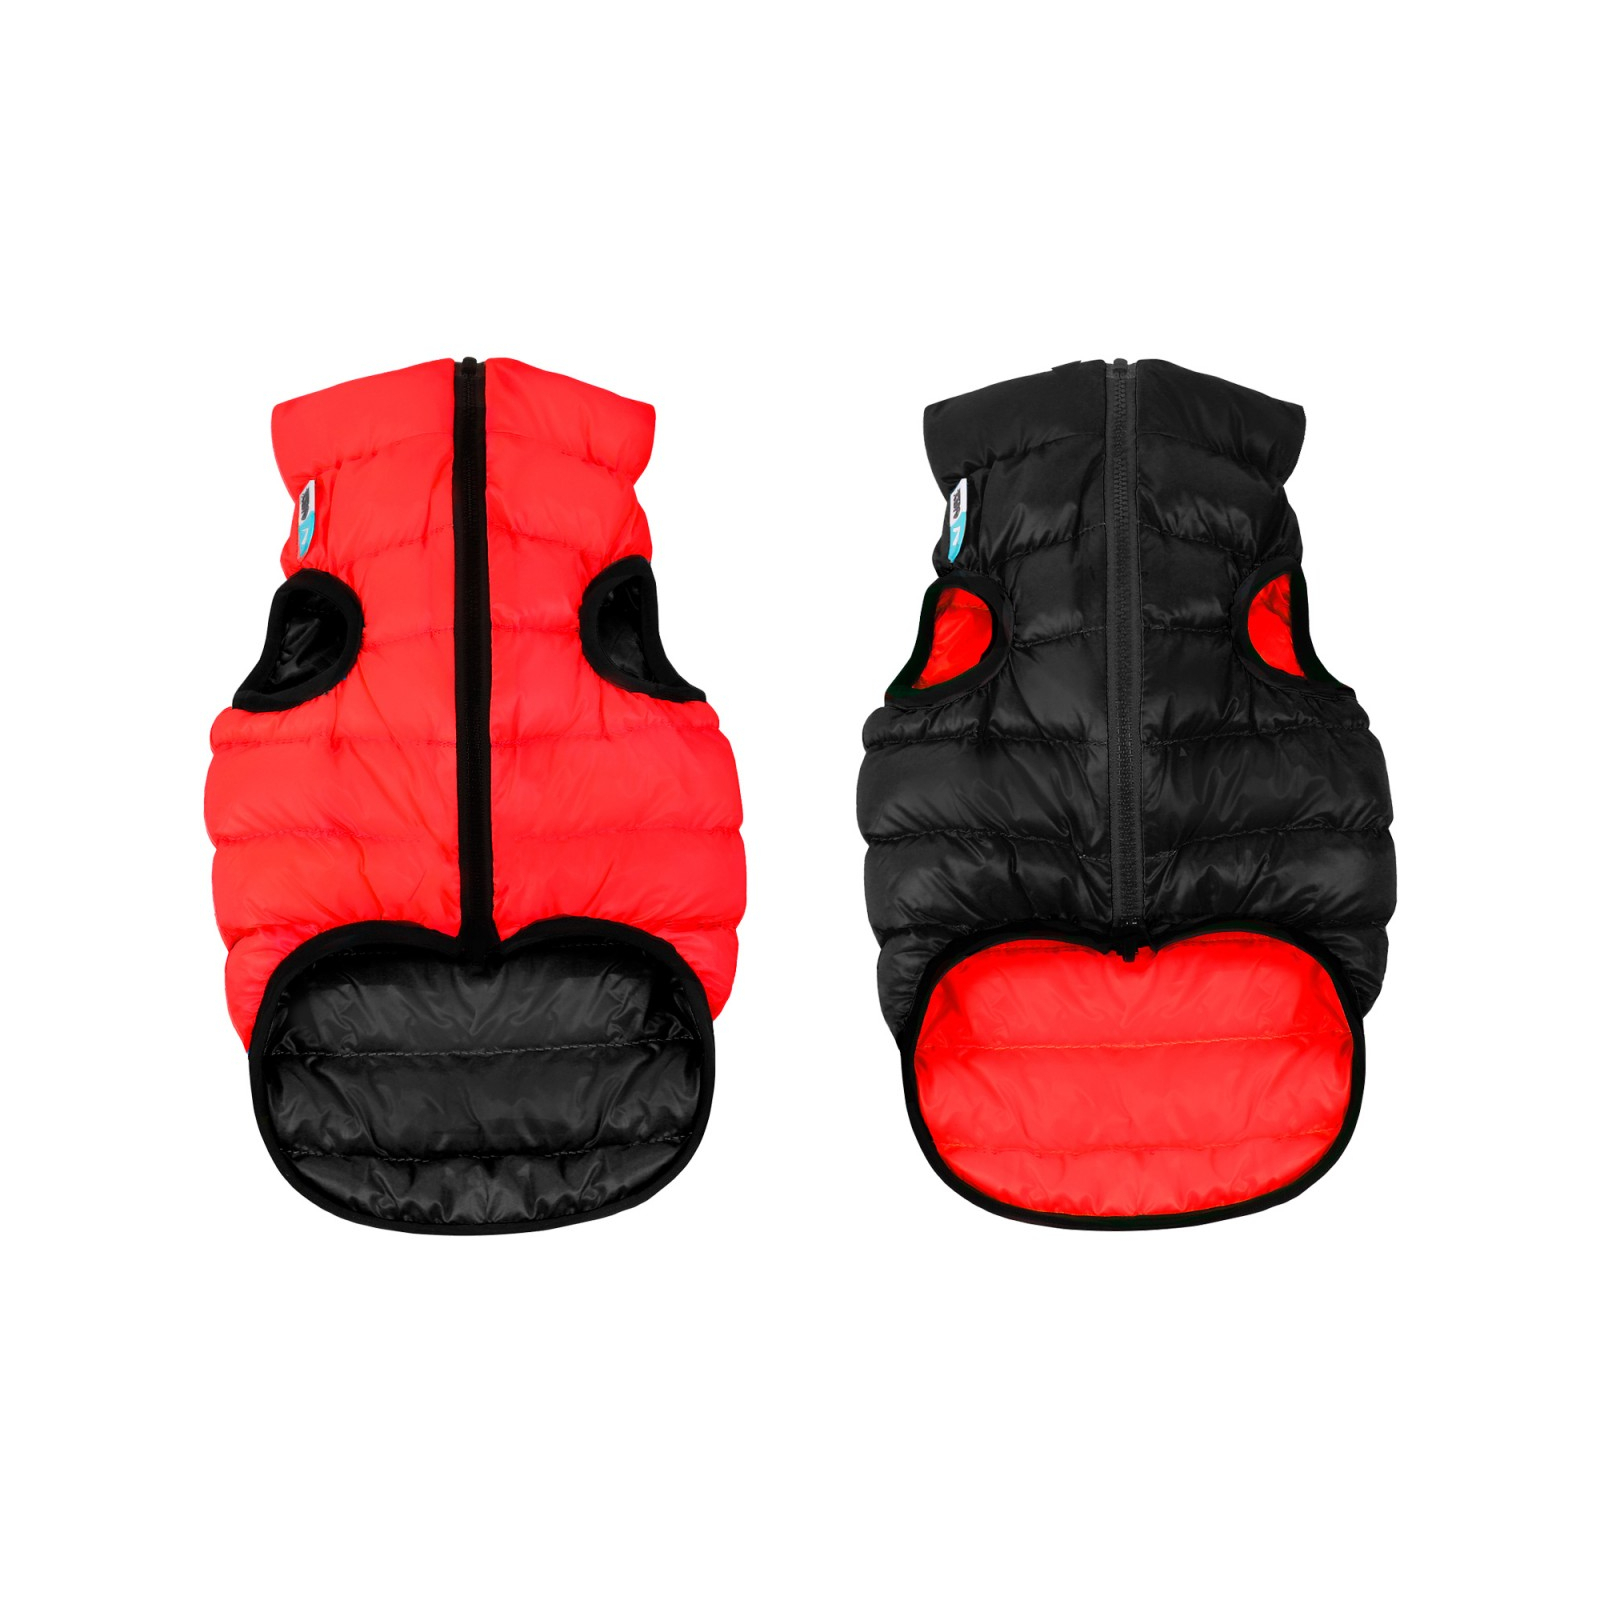 Курточка для животных Airy Vest двусторонняя XS 22 красно-чёрная (1700)